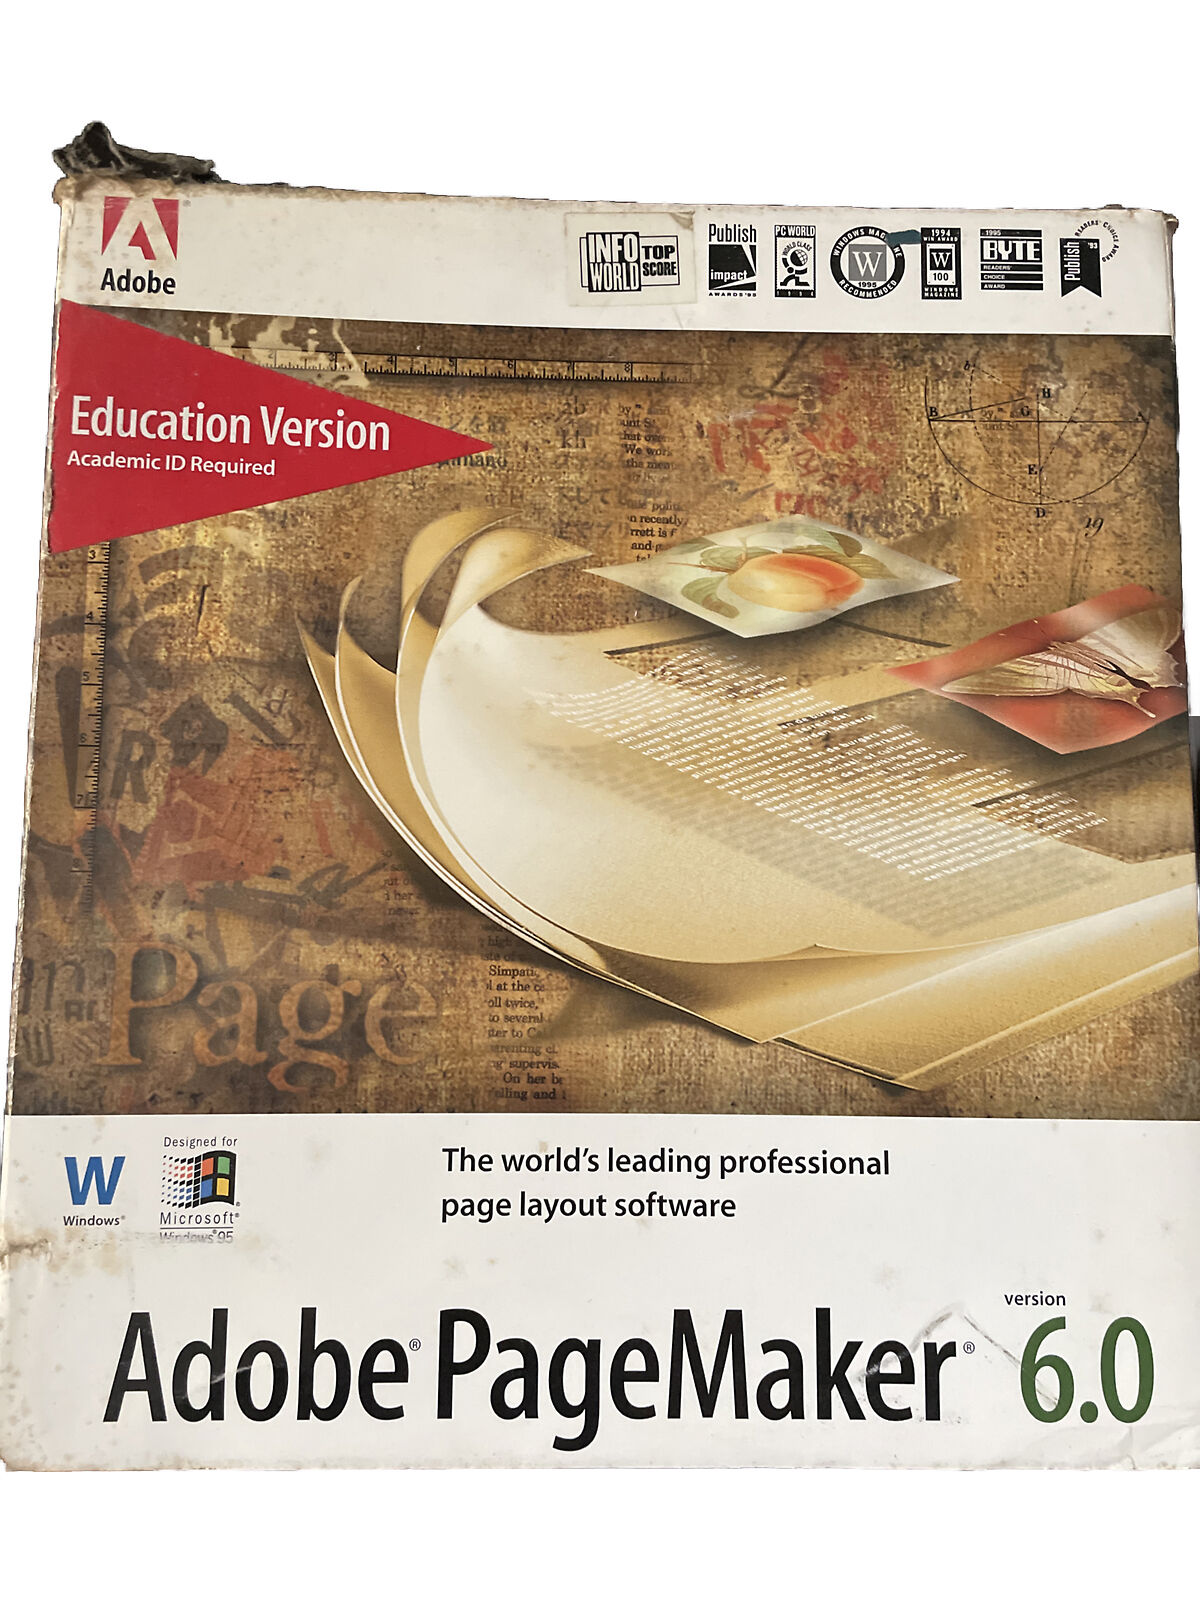 Adobe PageMaker 6.0 (Retail) (1 User/s) - Education Version